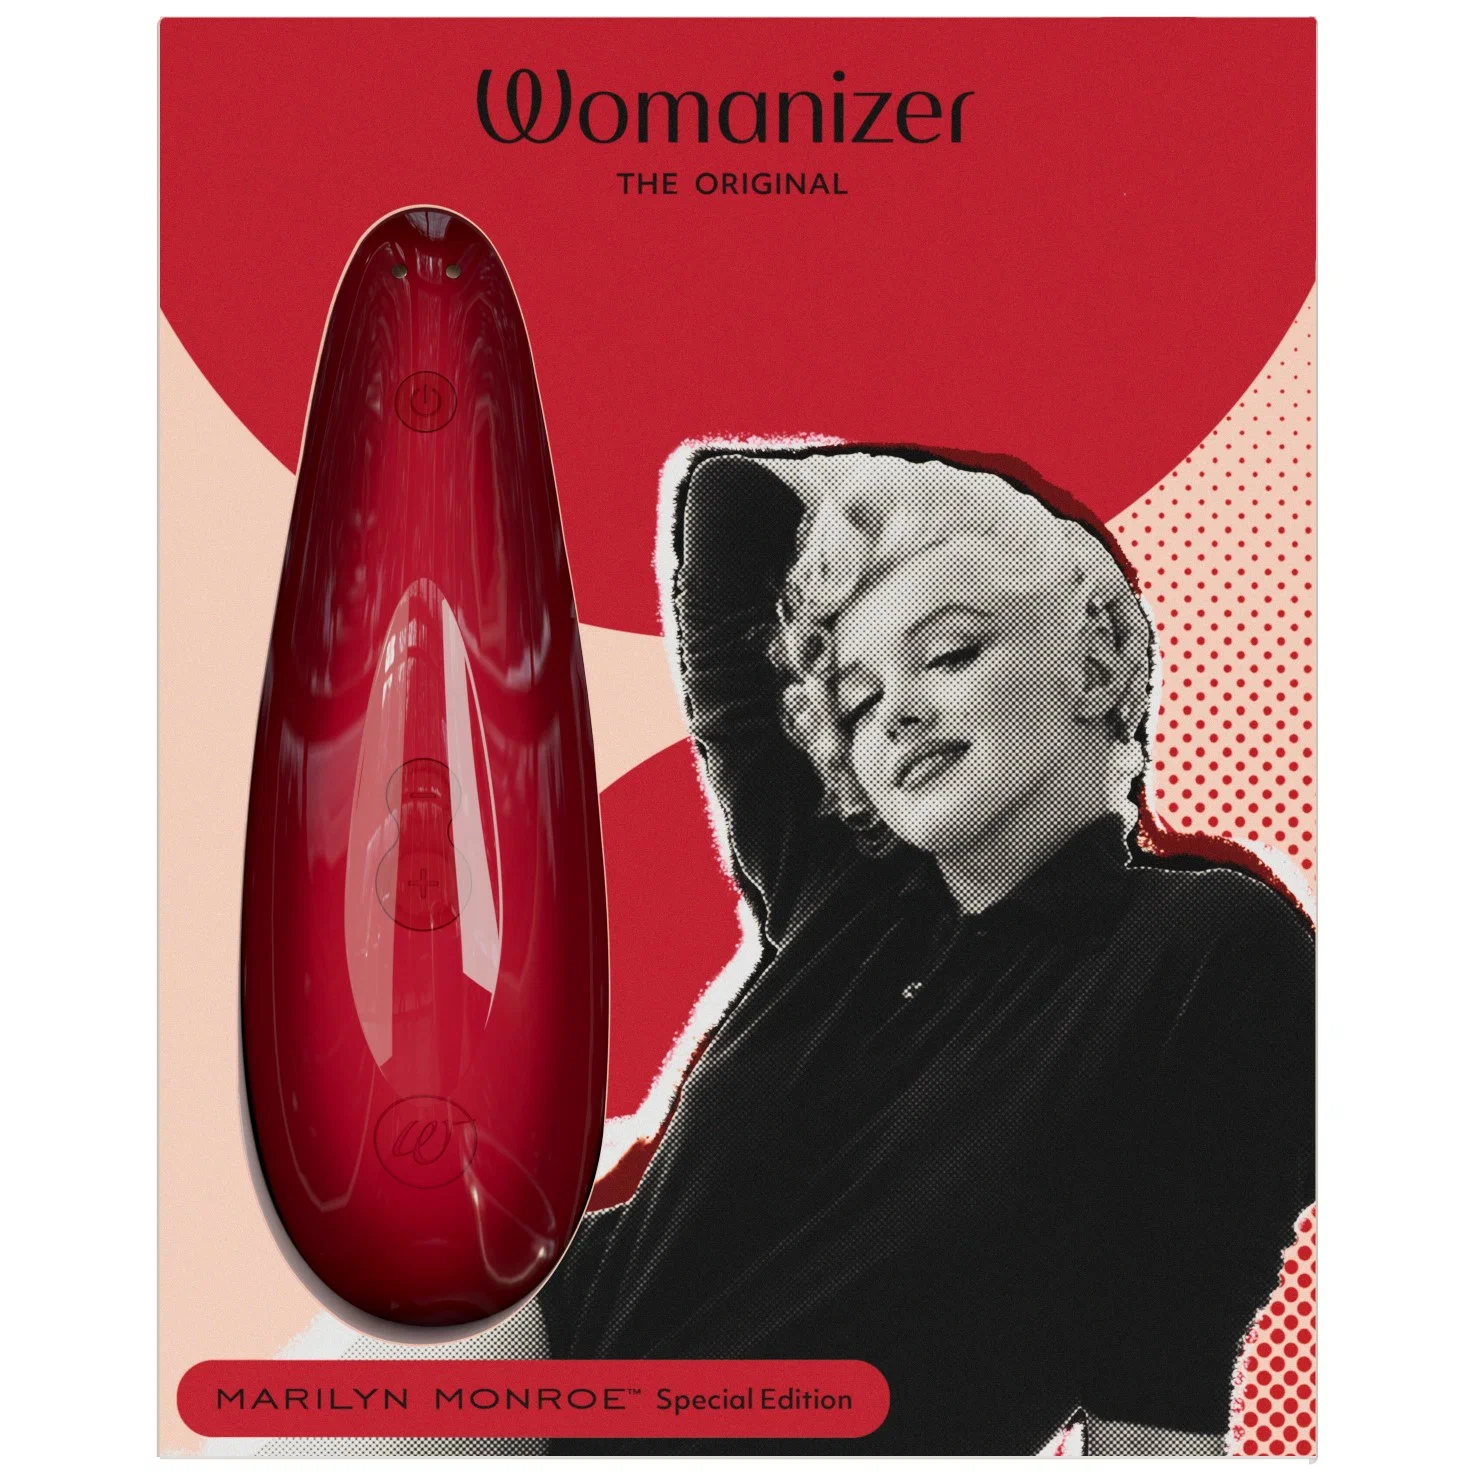  Womanizer Marilyn Monroe ярко-красный